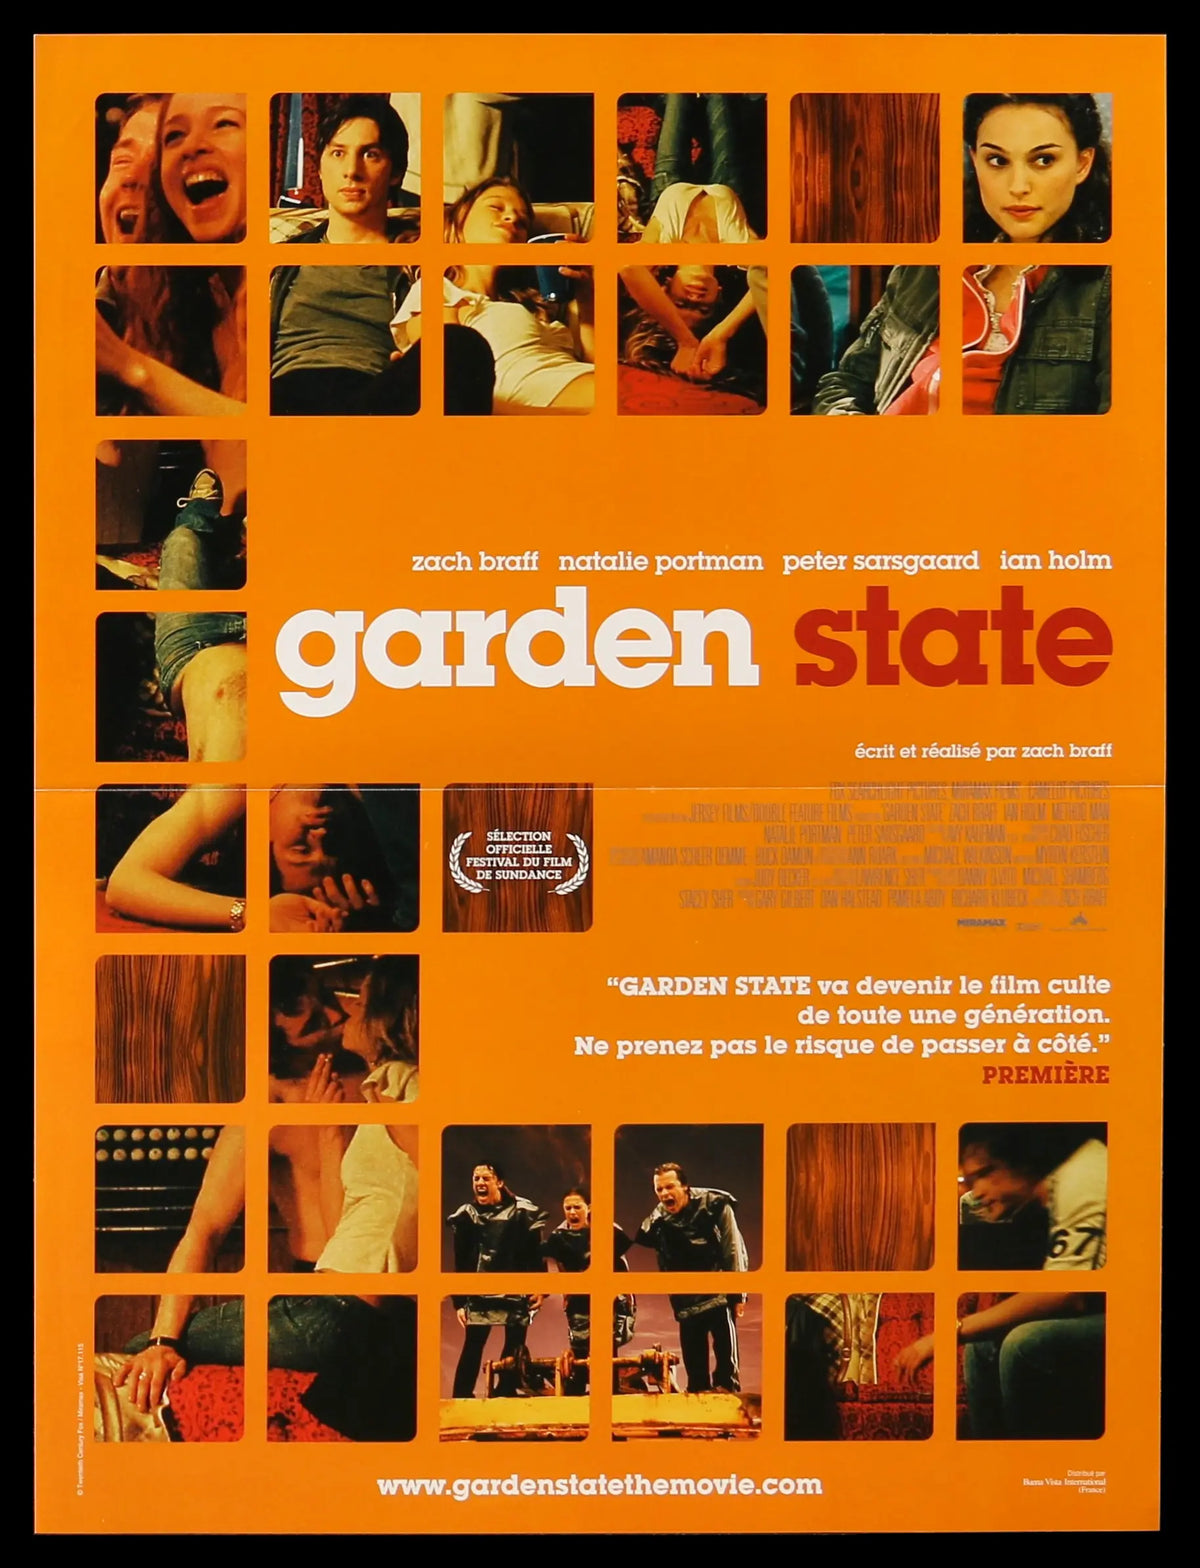 Garden State (2004) original movie poster for sale at Original Film Art